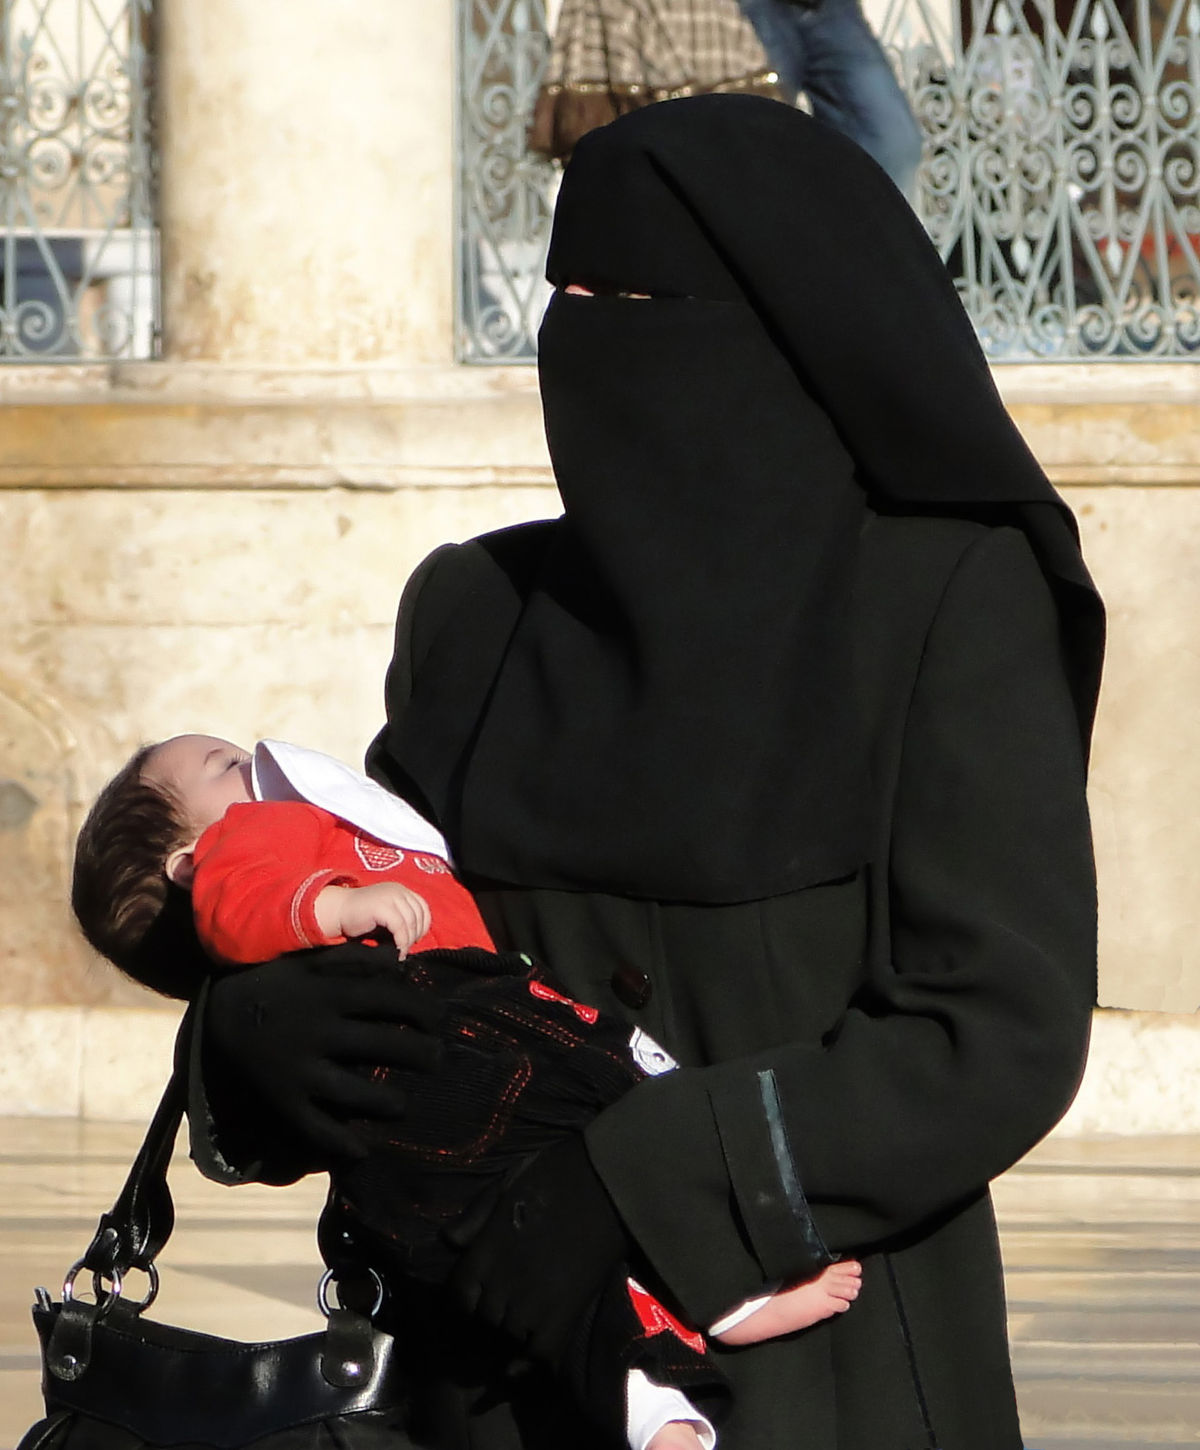 woman in niqab aleppo